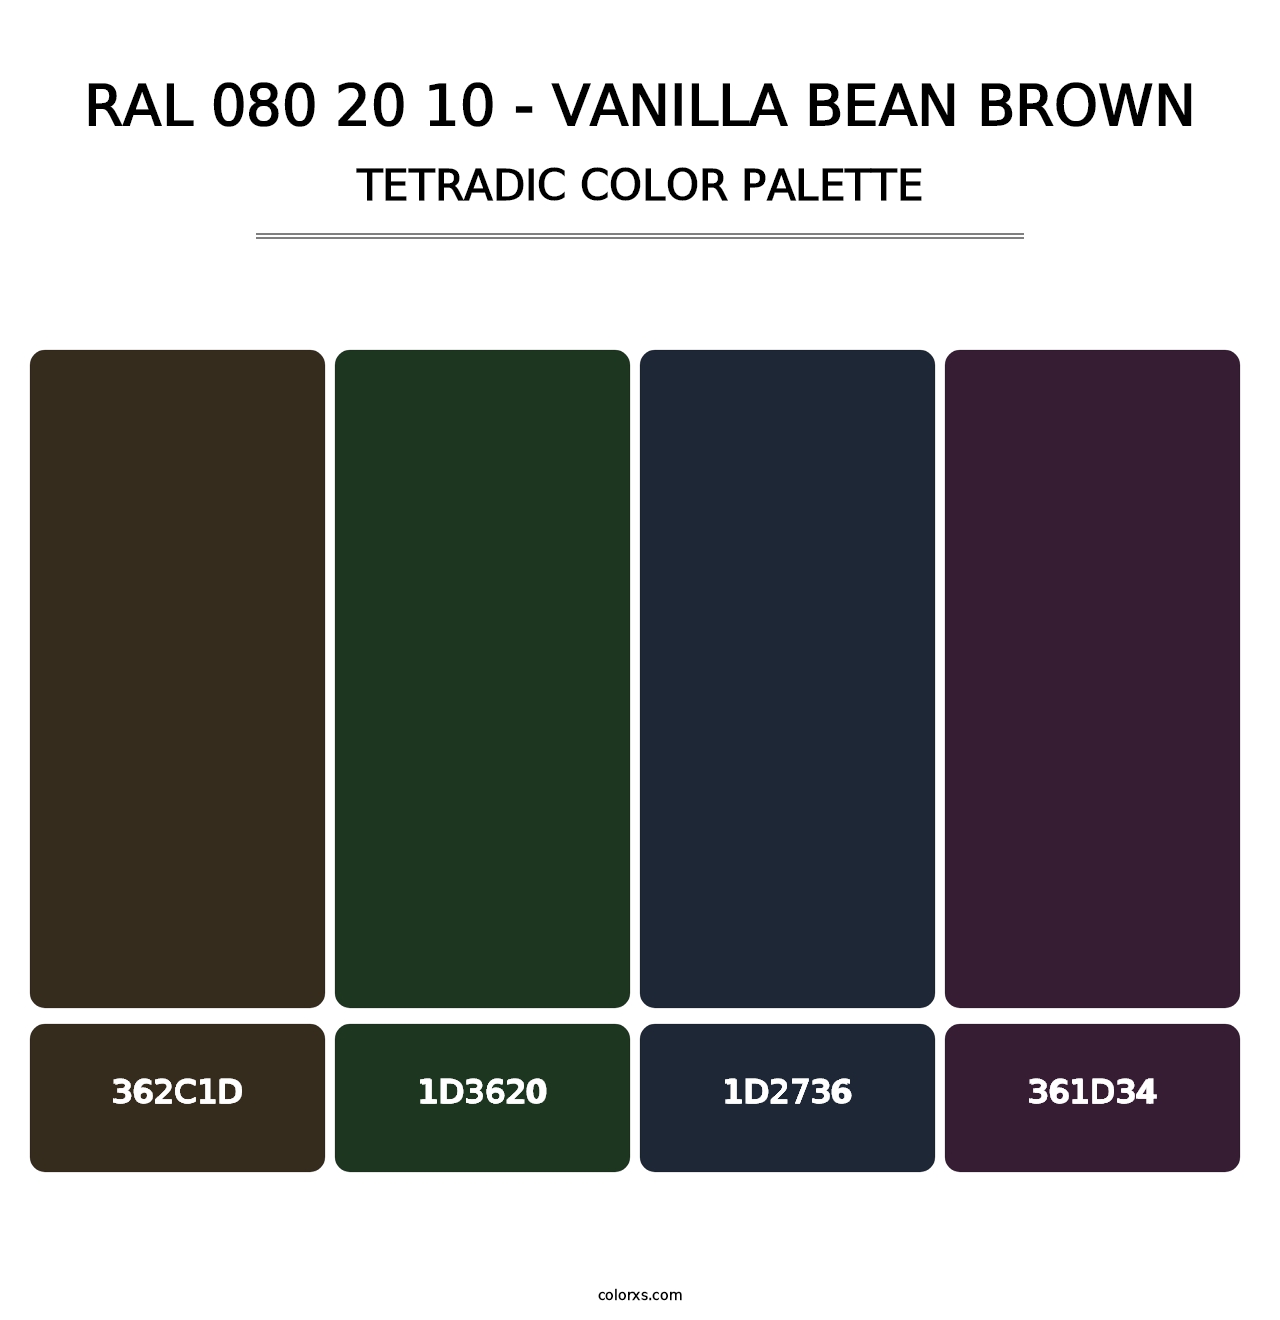 RAL 080 20 10 - Vanilla Bean Brown - Tetradic Color Palette